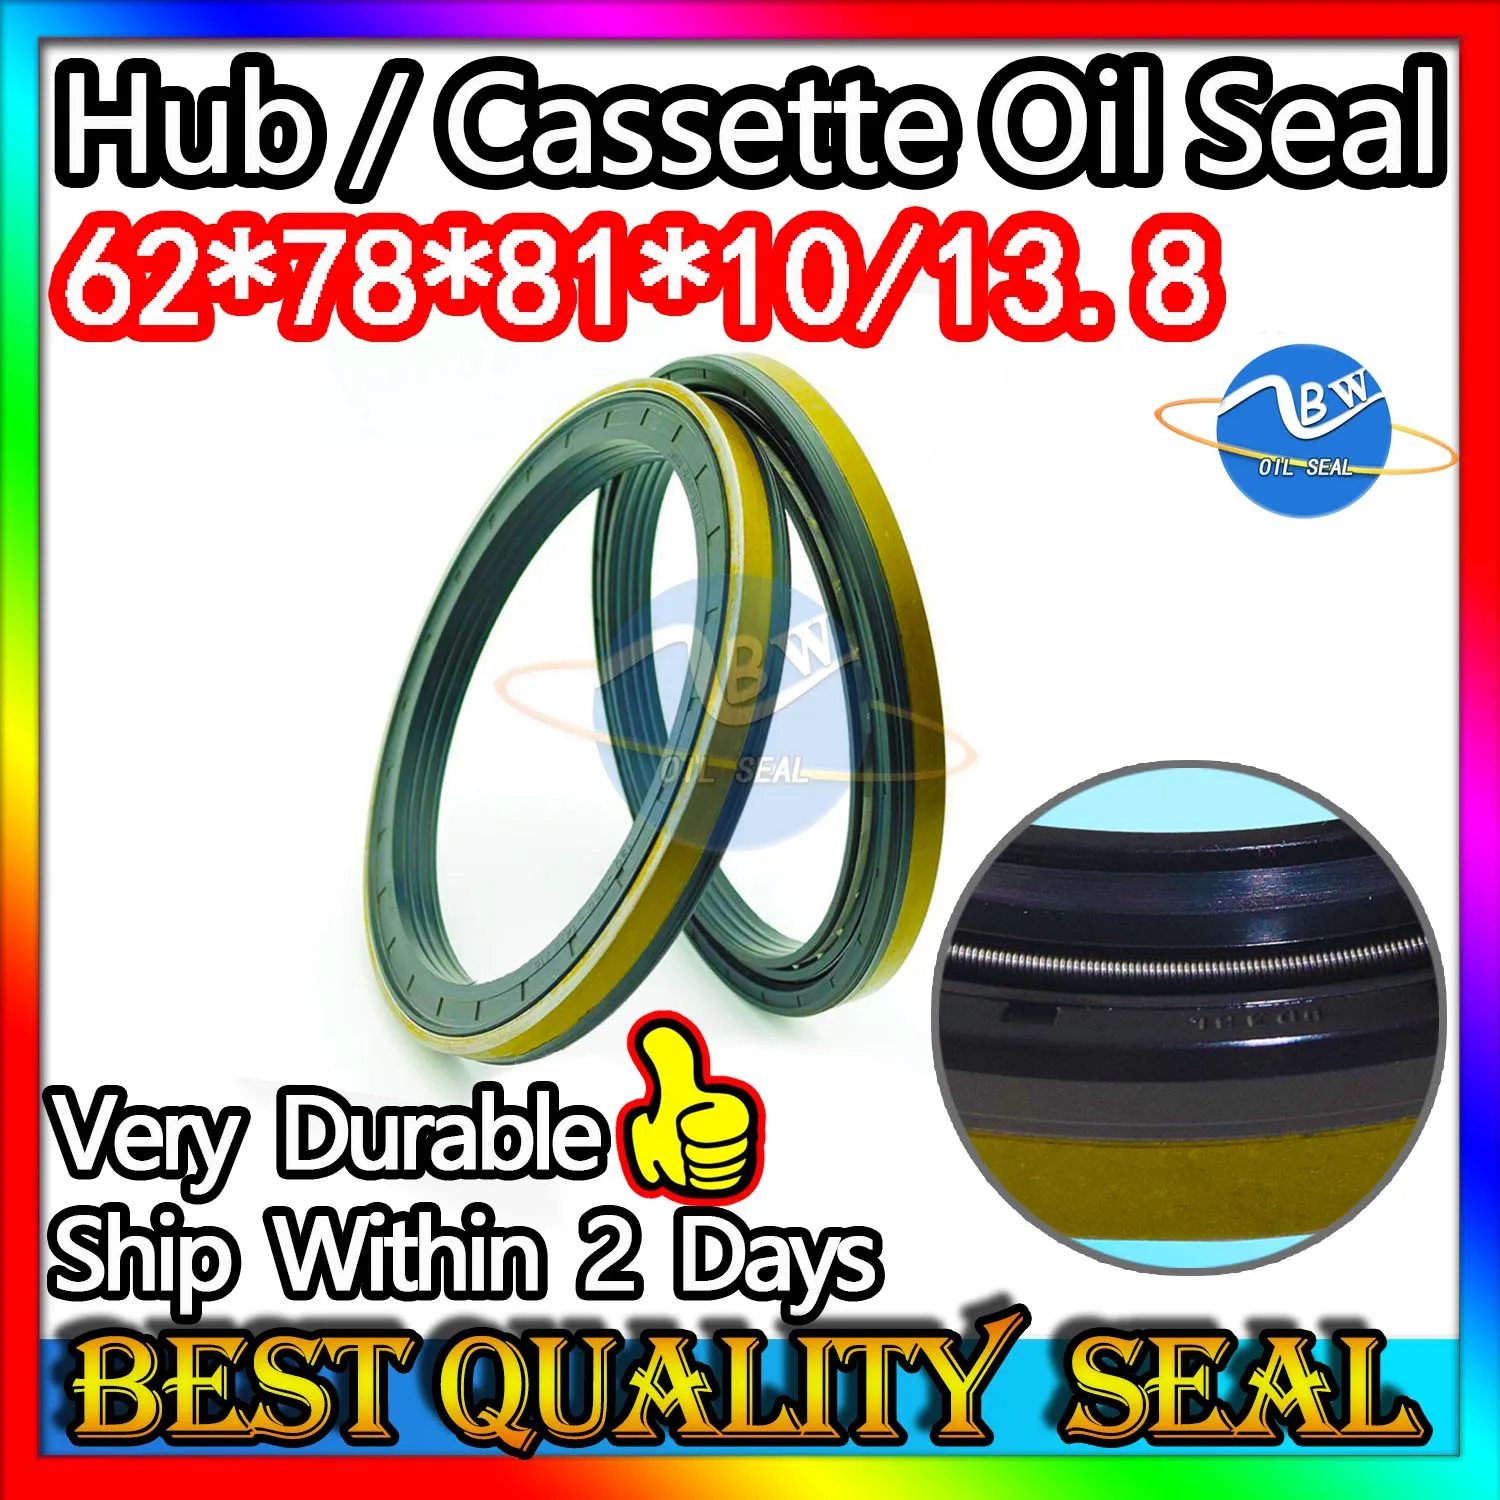 

Cassette Oil Seal 62*78*81*10/13.8 12018177B Hub Oil Sealing For Tractor Cat High Quality 62X78X81X10/13.8 12018177B Adjust Gear